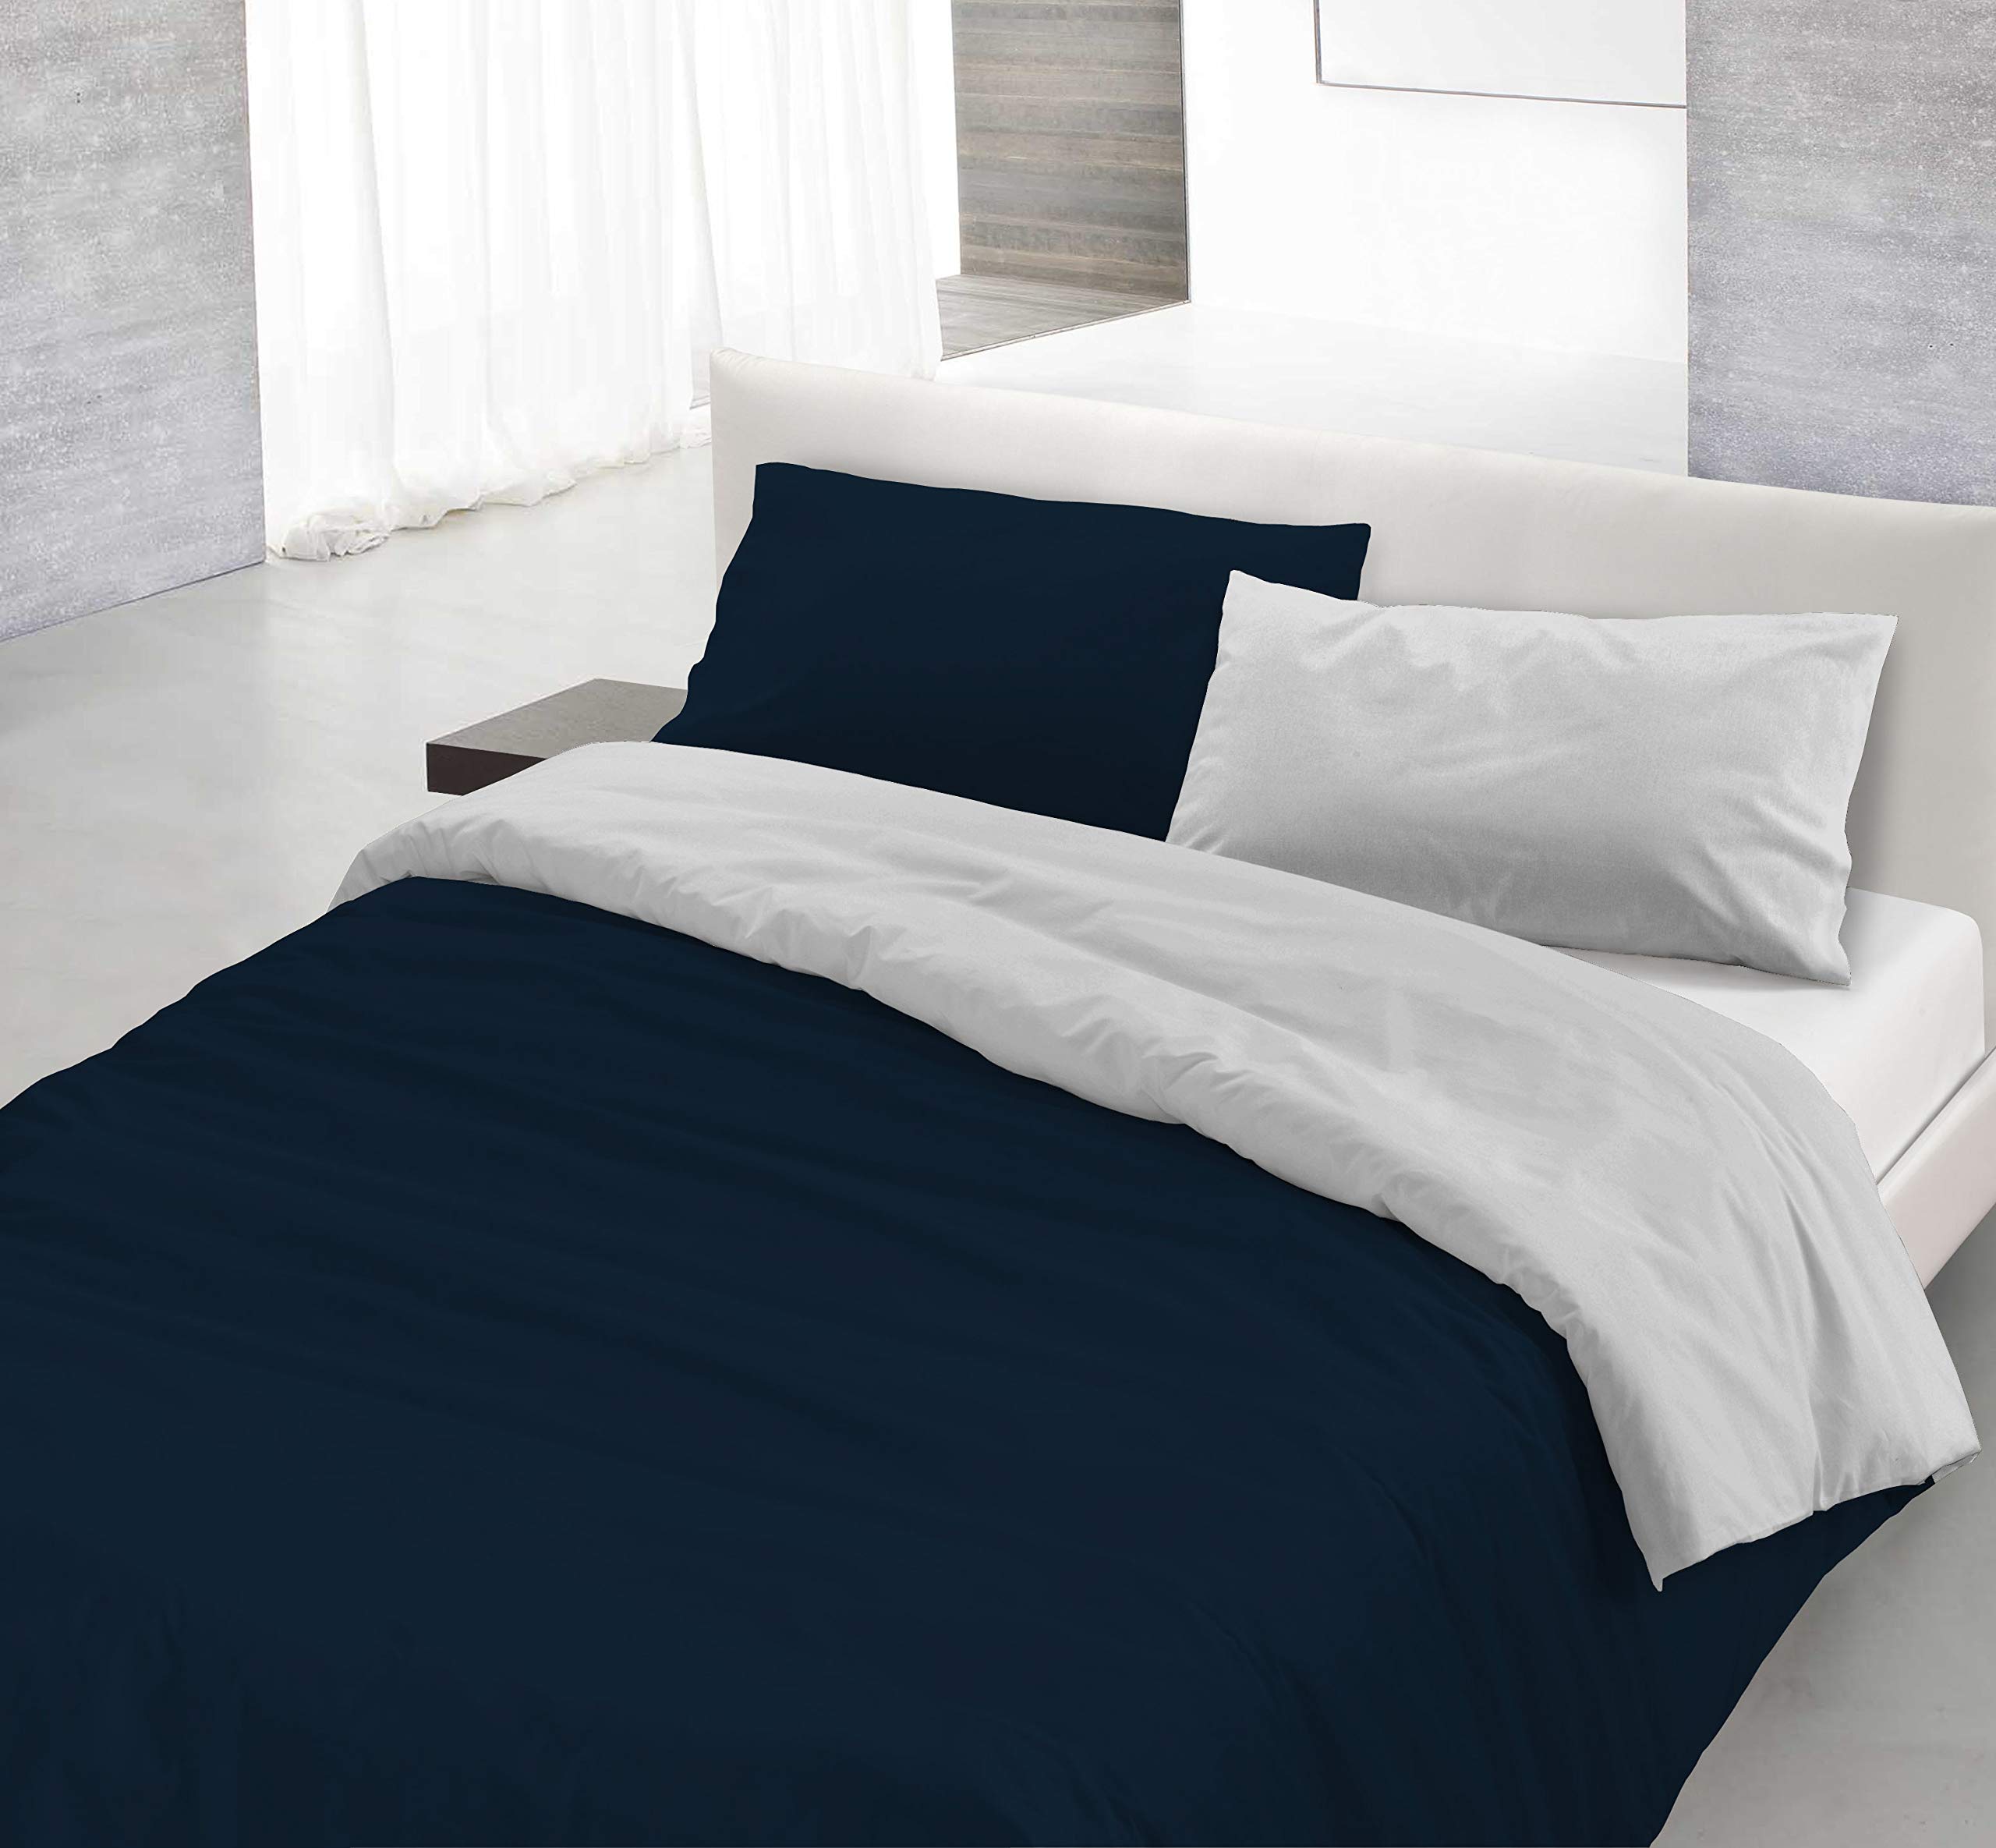 Italian Bed Linen Natural Color Doubleface Bettbezug, 100% Baumwolle, hell Grau/Rauch, Doppelte